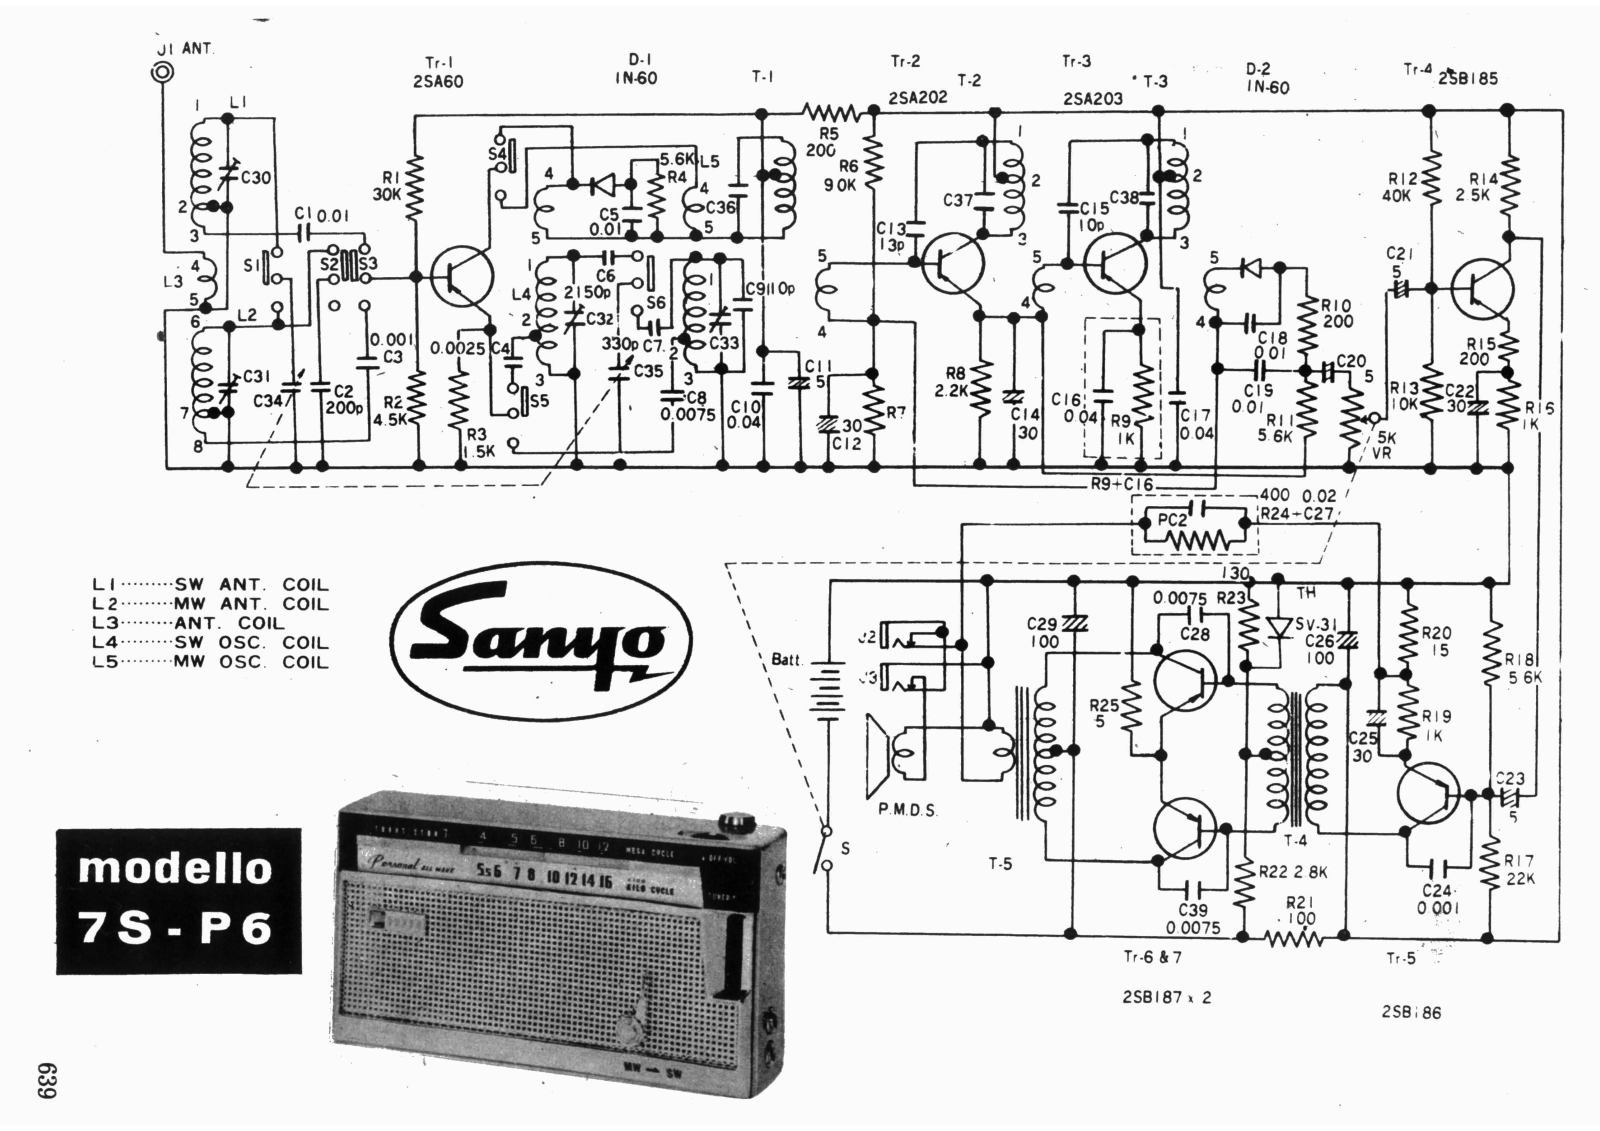 Sanyo 7s p6 schematic